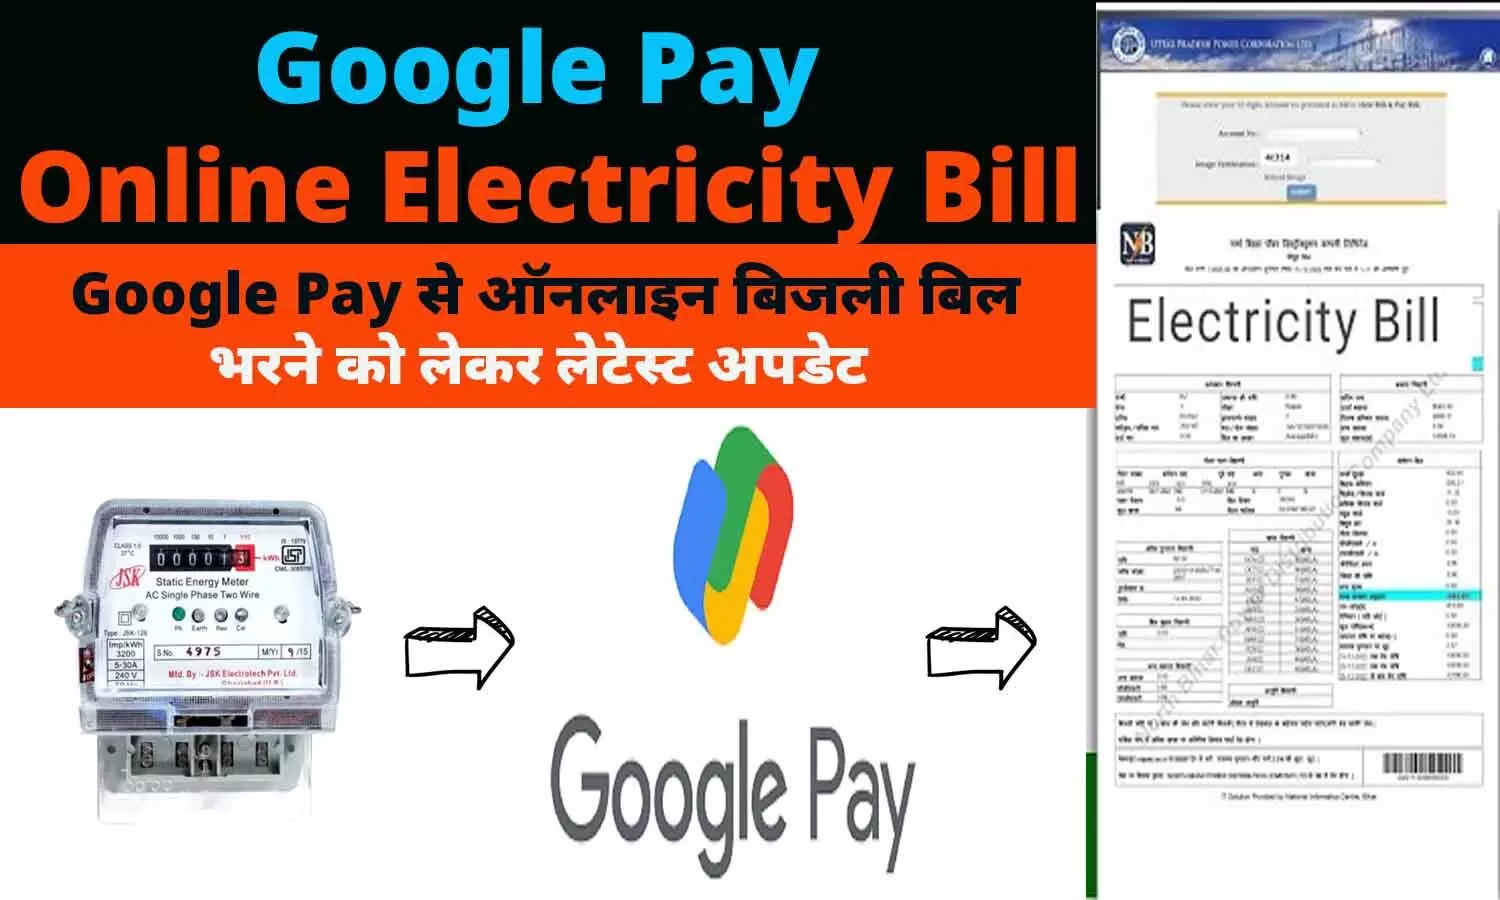 Google Pay Online Electricity Bill: बड़ा ऐलान! Google Pay से ऑनलाइन बिजली बिल भरने को लेकर लेटेस्ट अपडेट